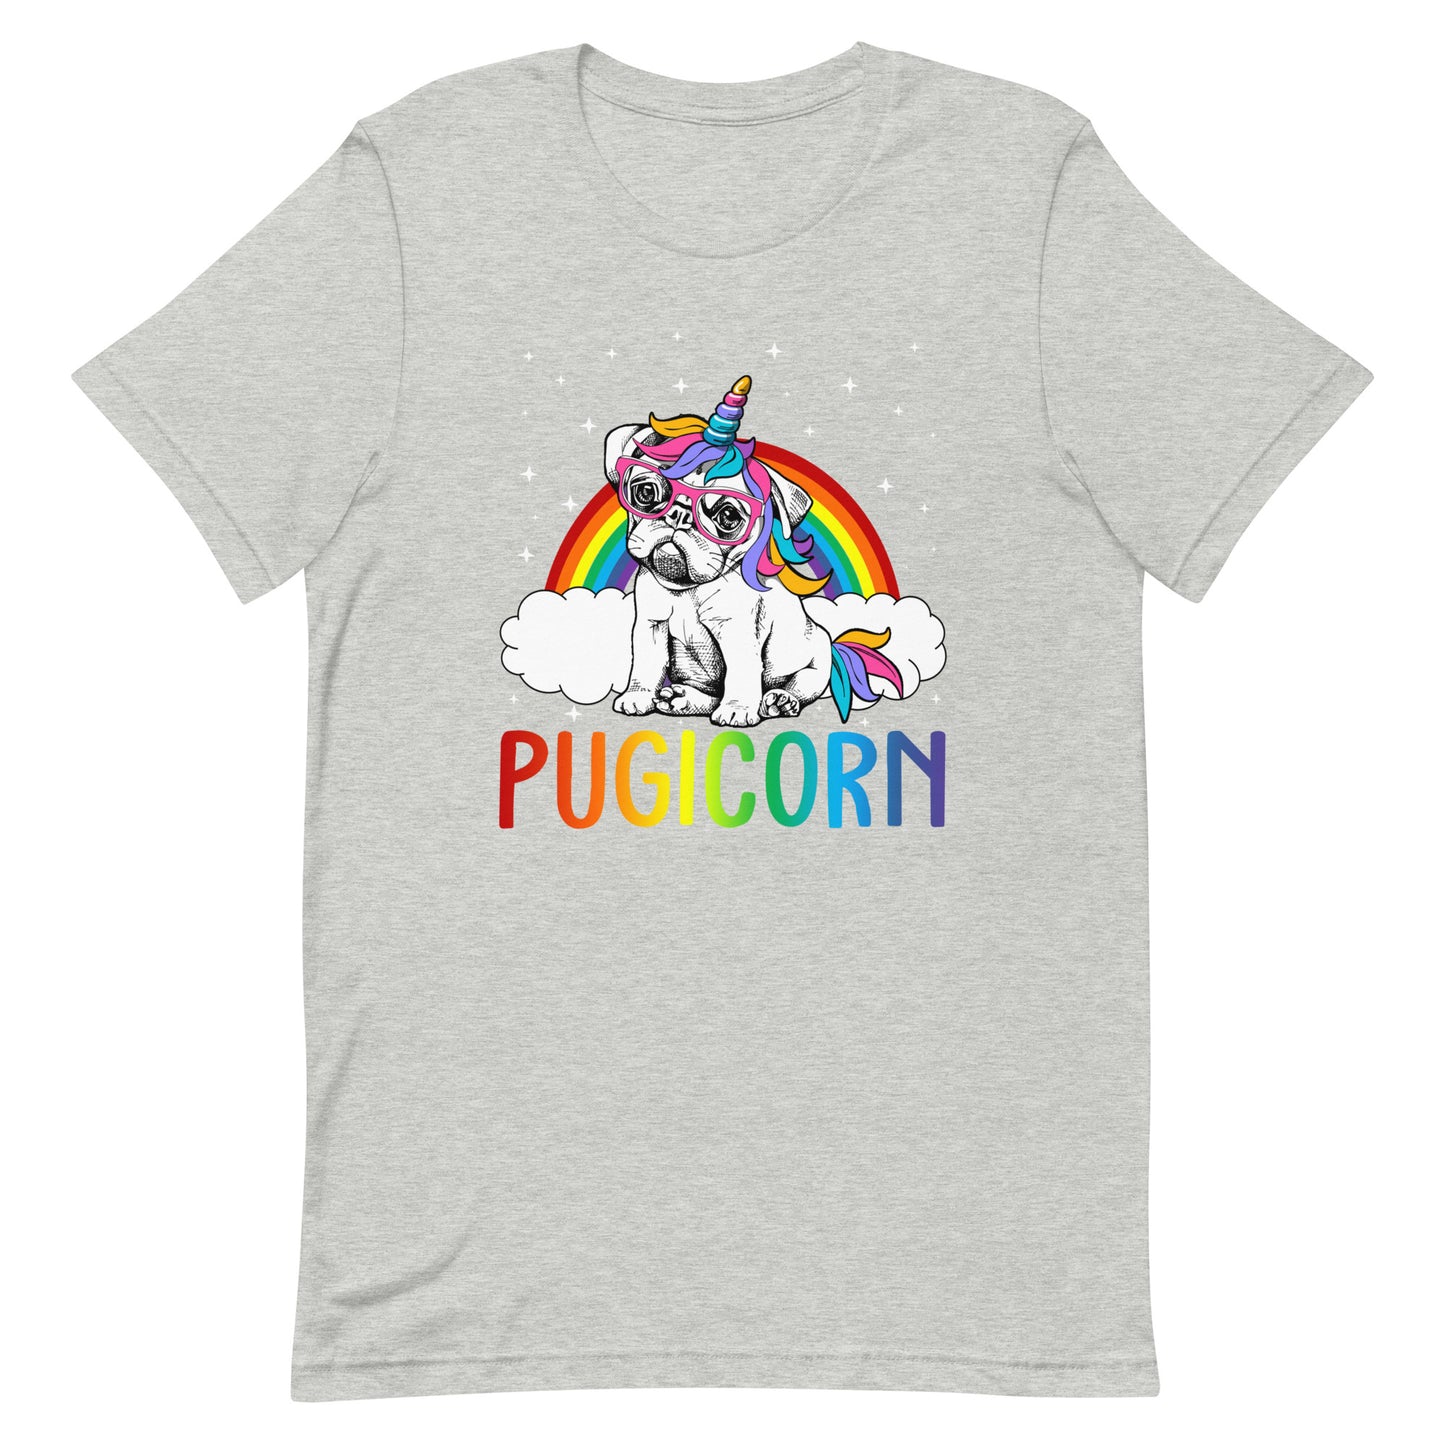 Pugicorn Pride Tee for Pug Lovers